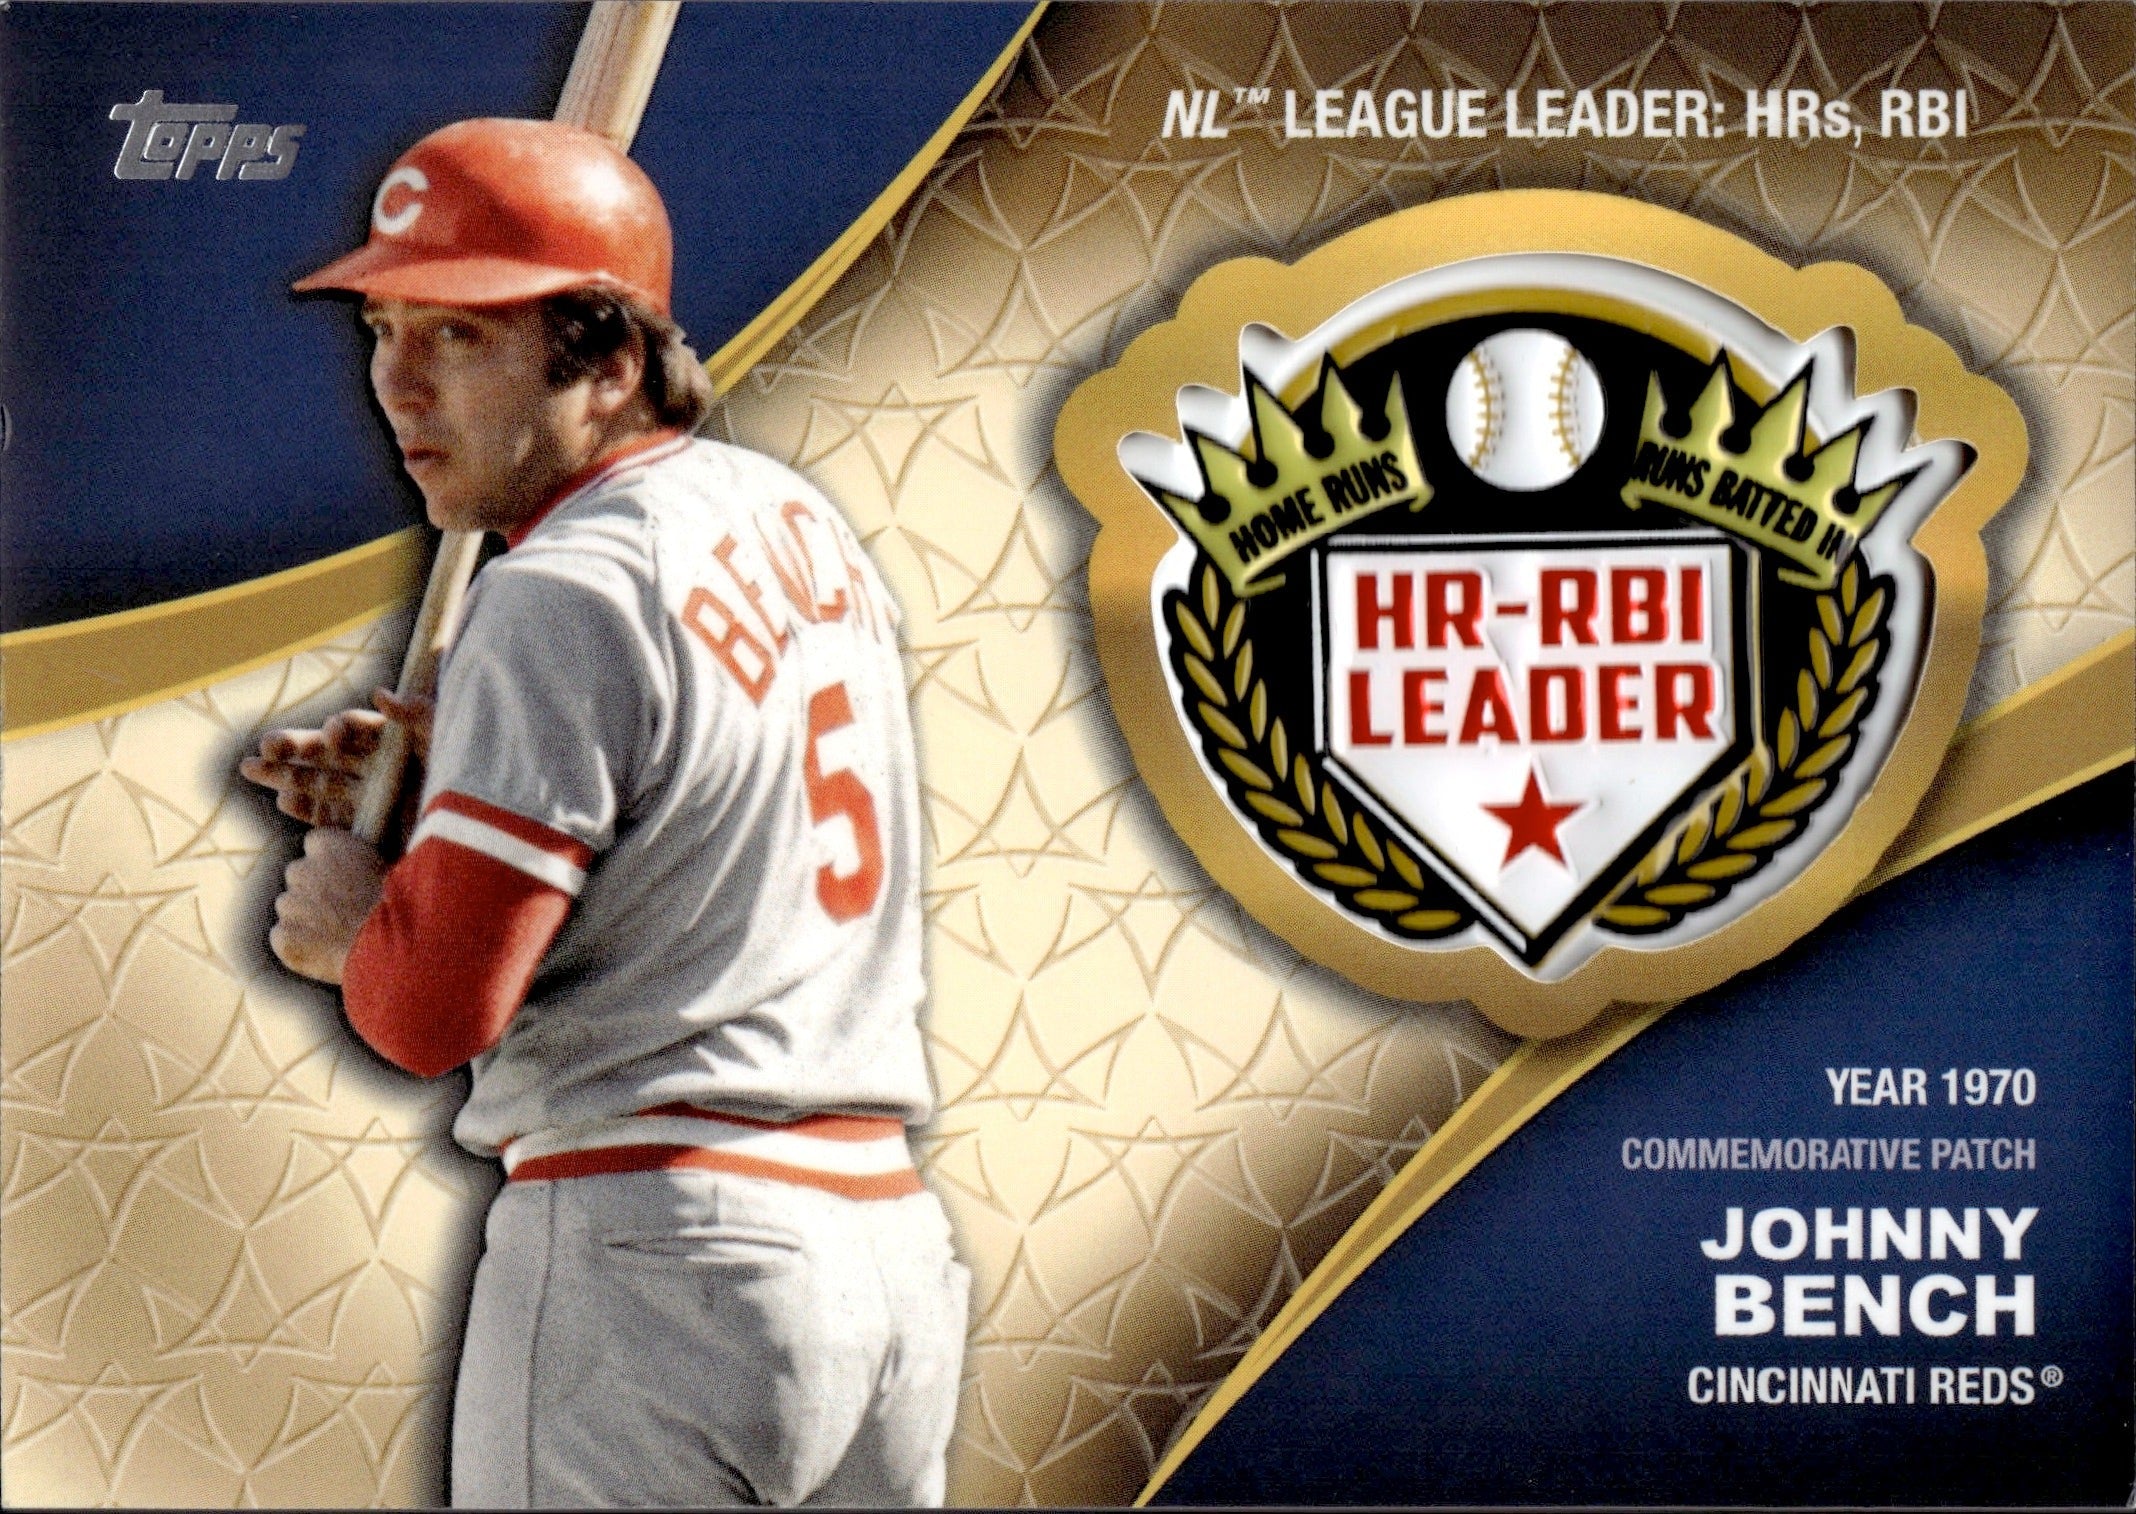 JB 1969  Johnny bench, Cincinnati reds, Reds baseball